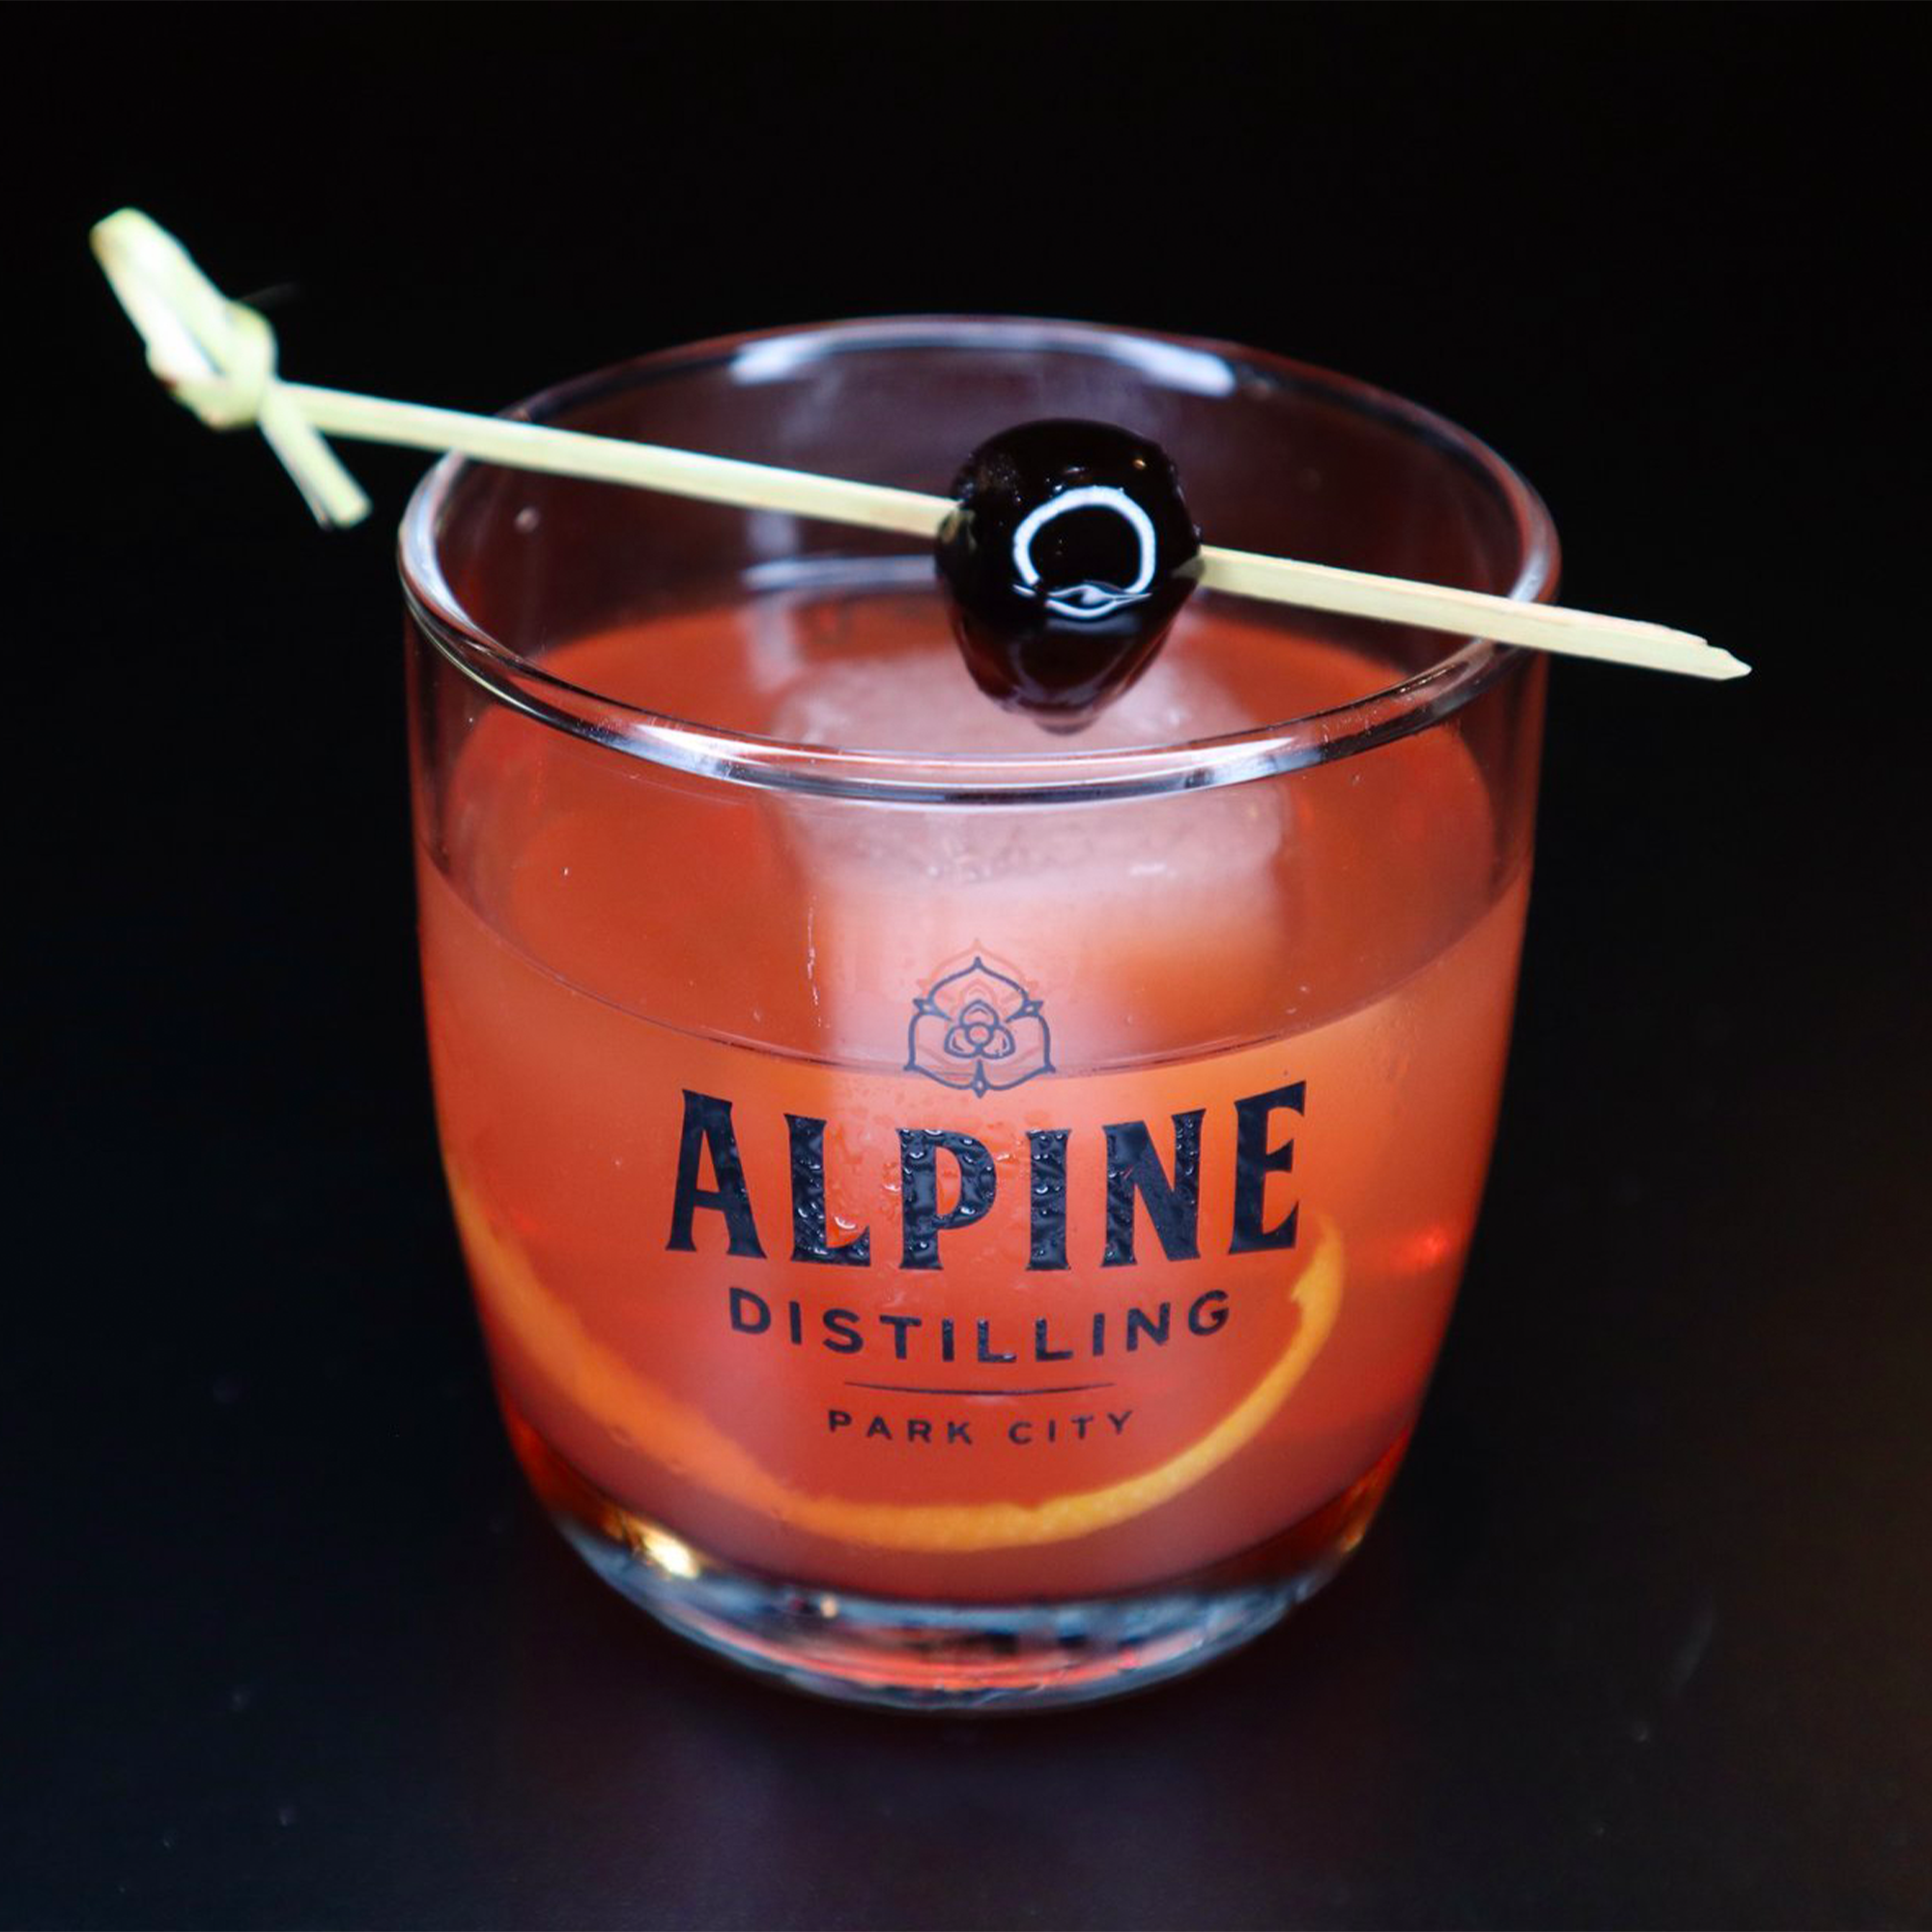 Alpine Distilling Elevated Gin